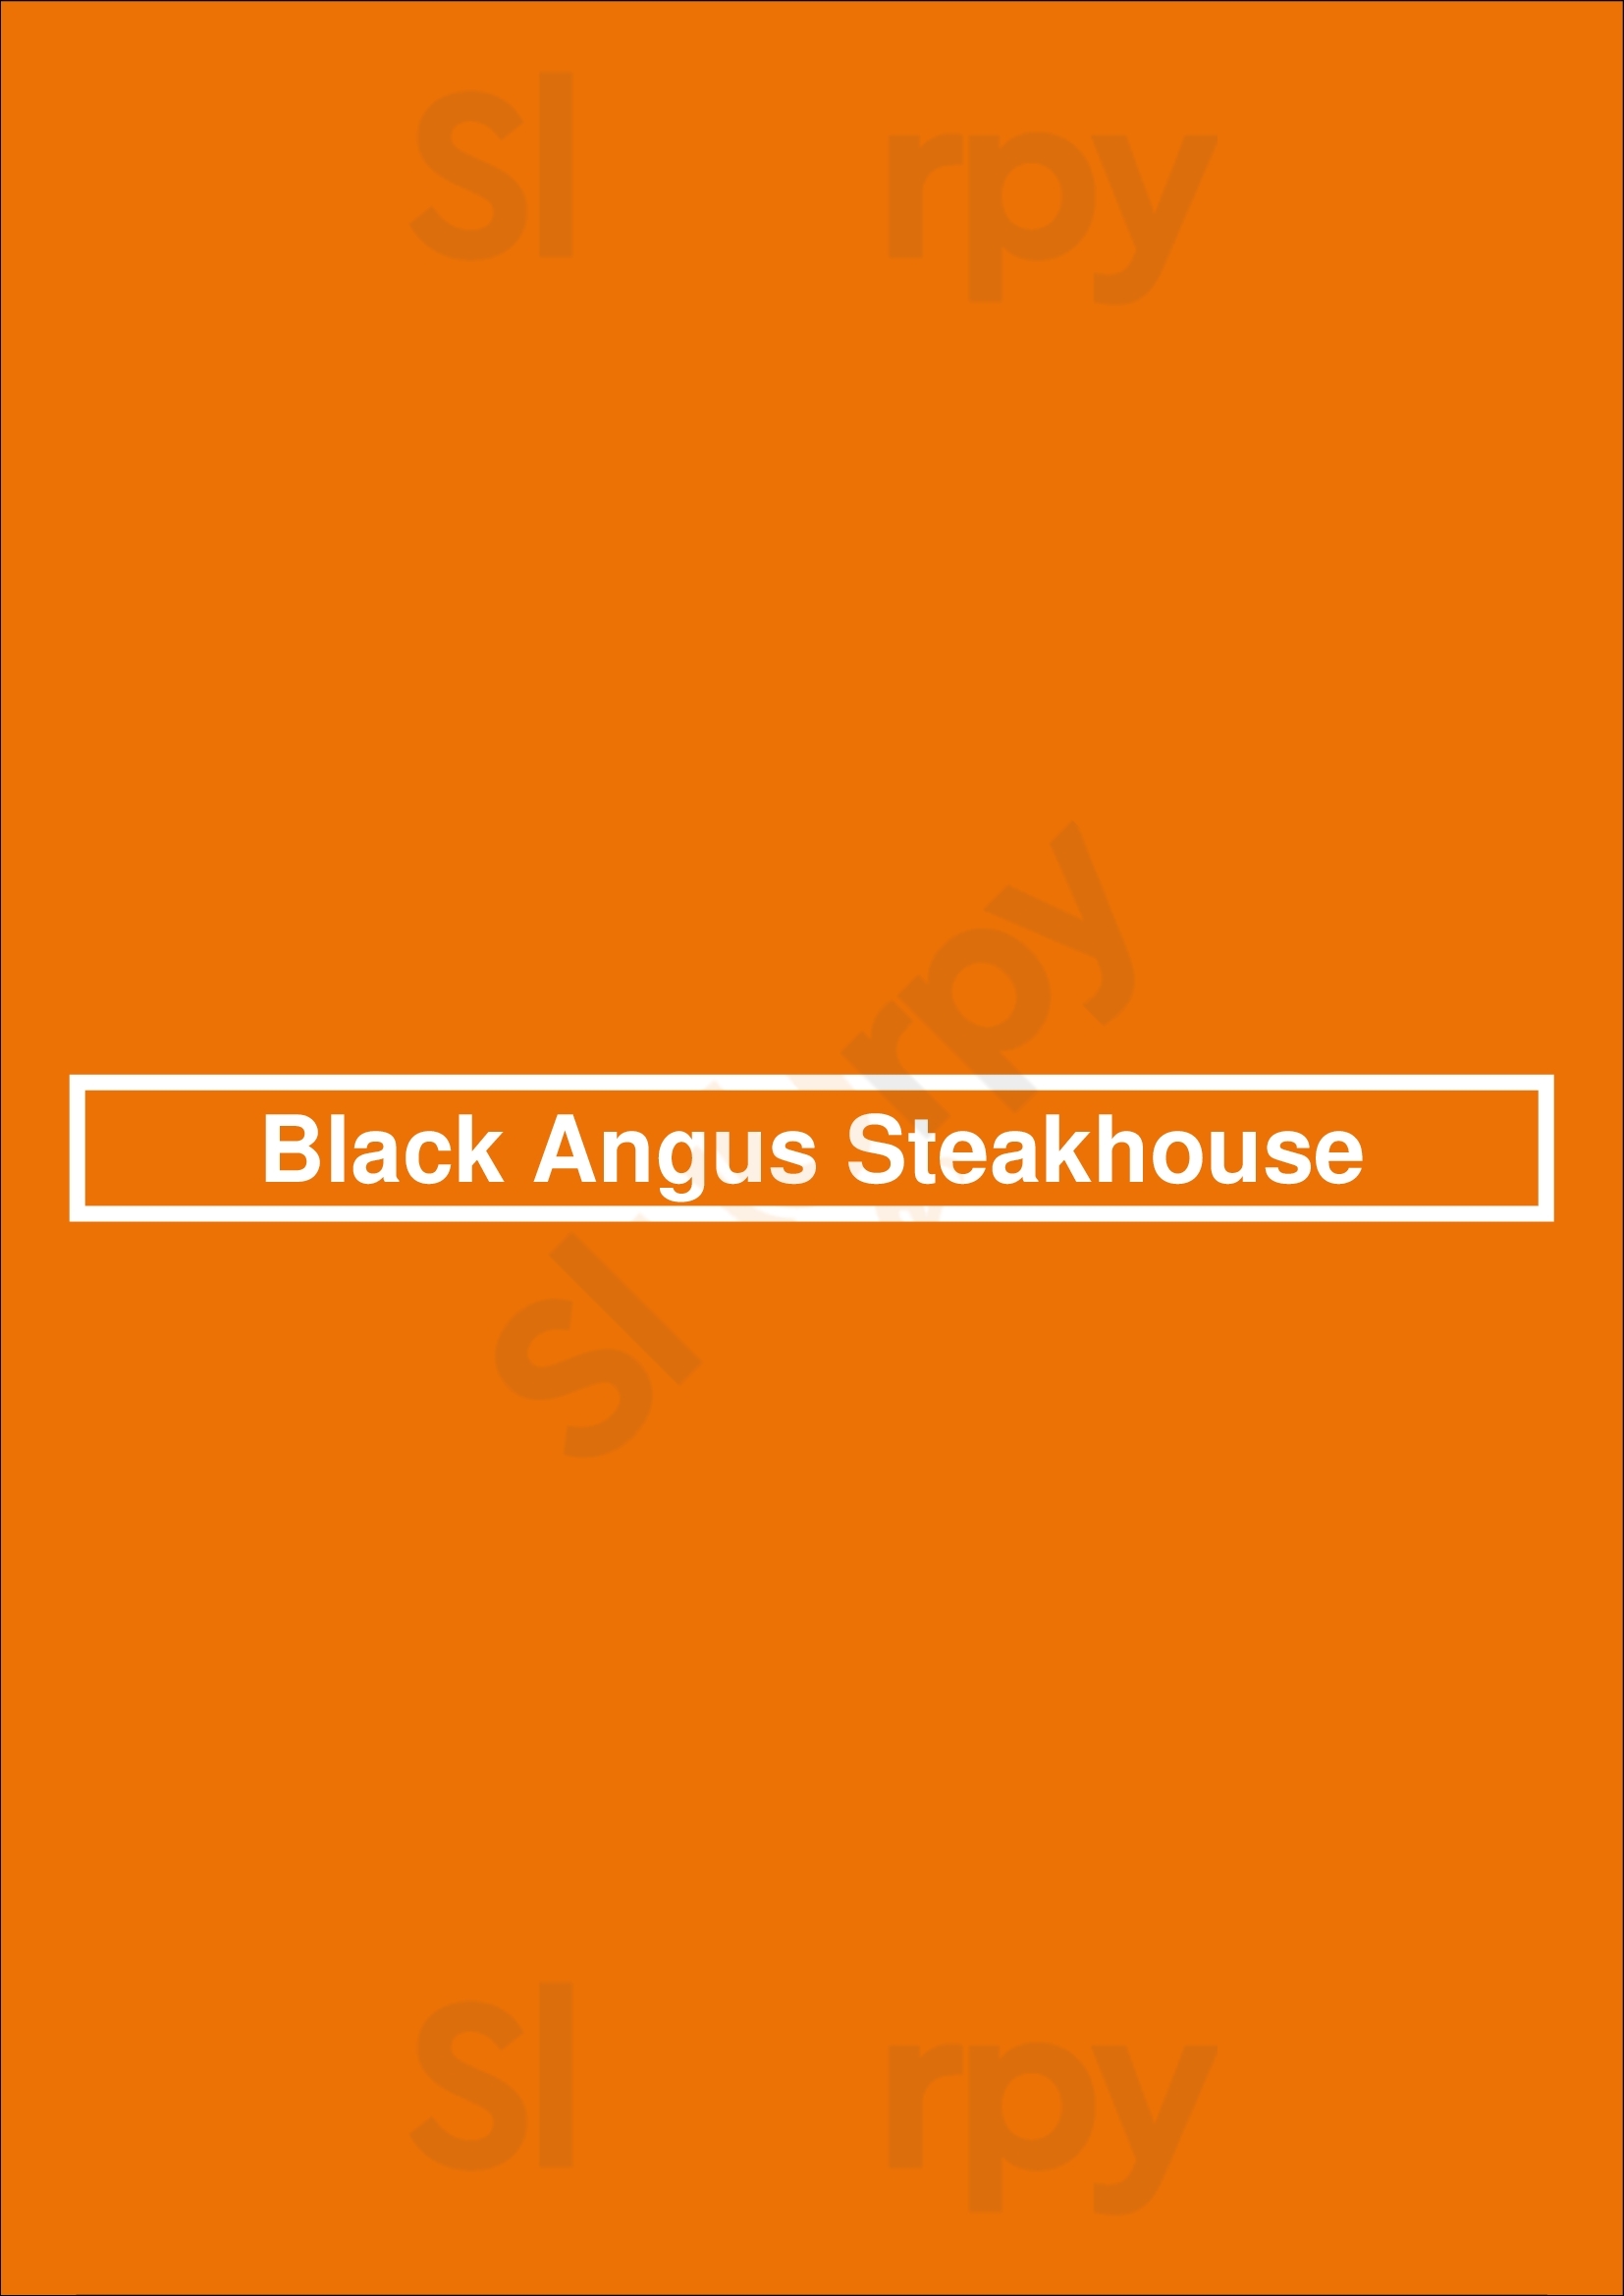 Black Angus Steakhouse Orlando Menu - 1